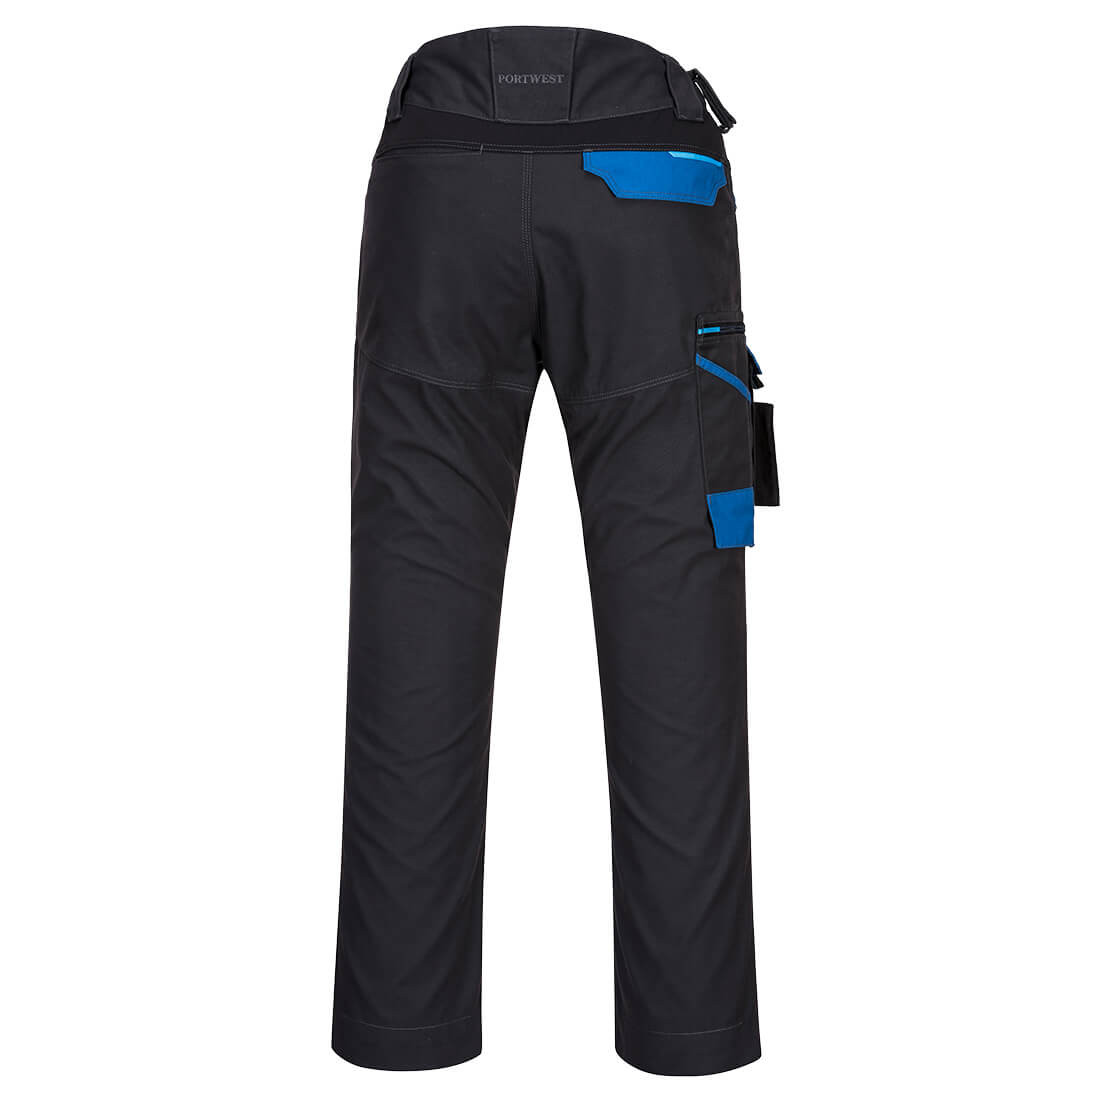 Pantaloni Service WX3 - Imbracaminte de protectie